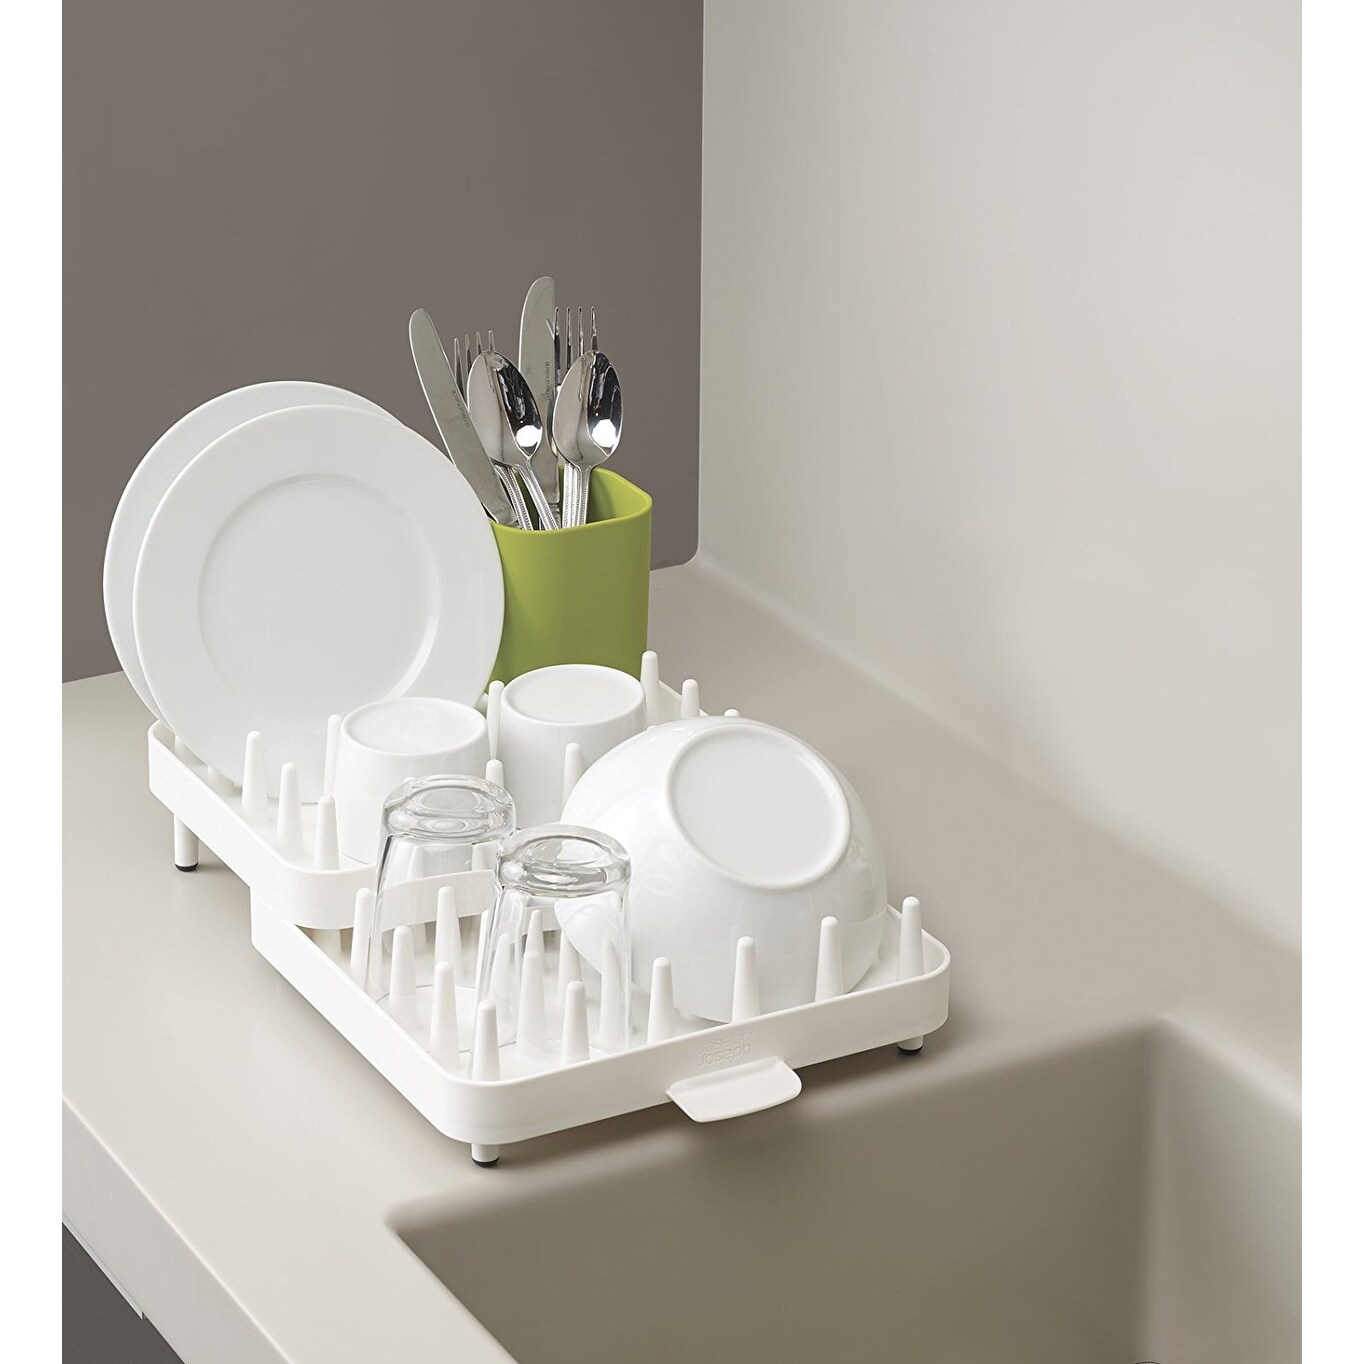 Adjustable Plate Holder Kitchen Accessories - Spitze By Everyday